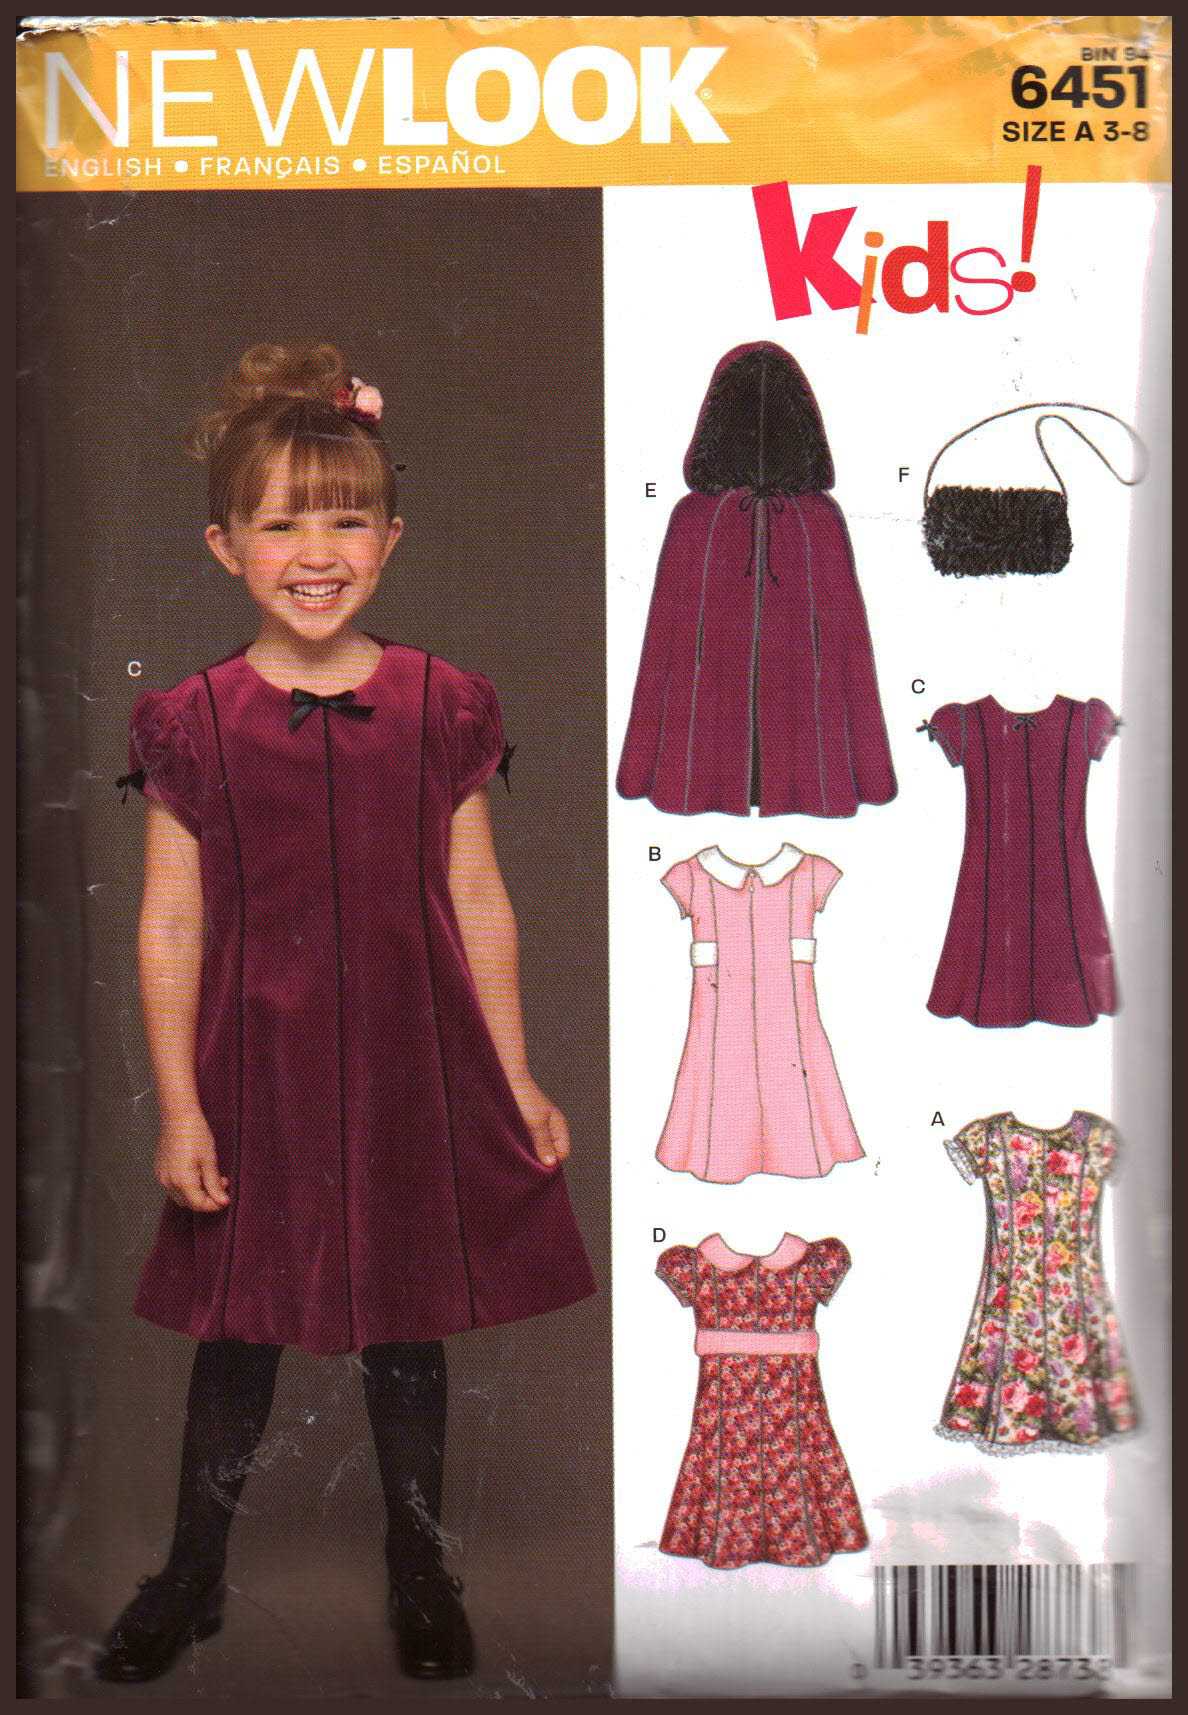 Littlest girls dresses New Look sewing pattern